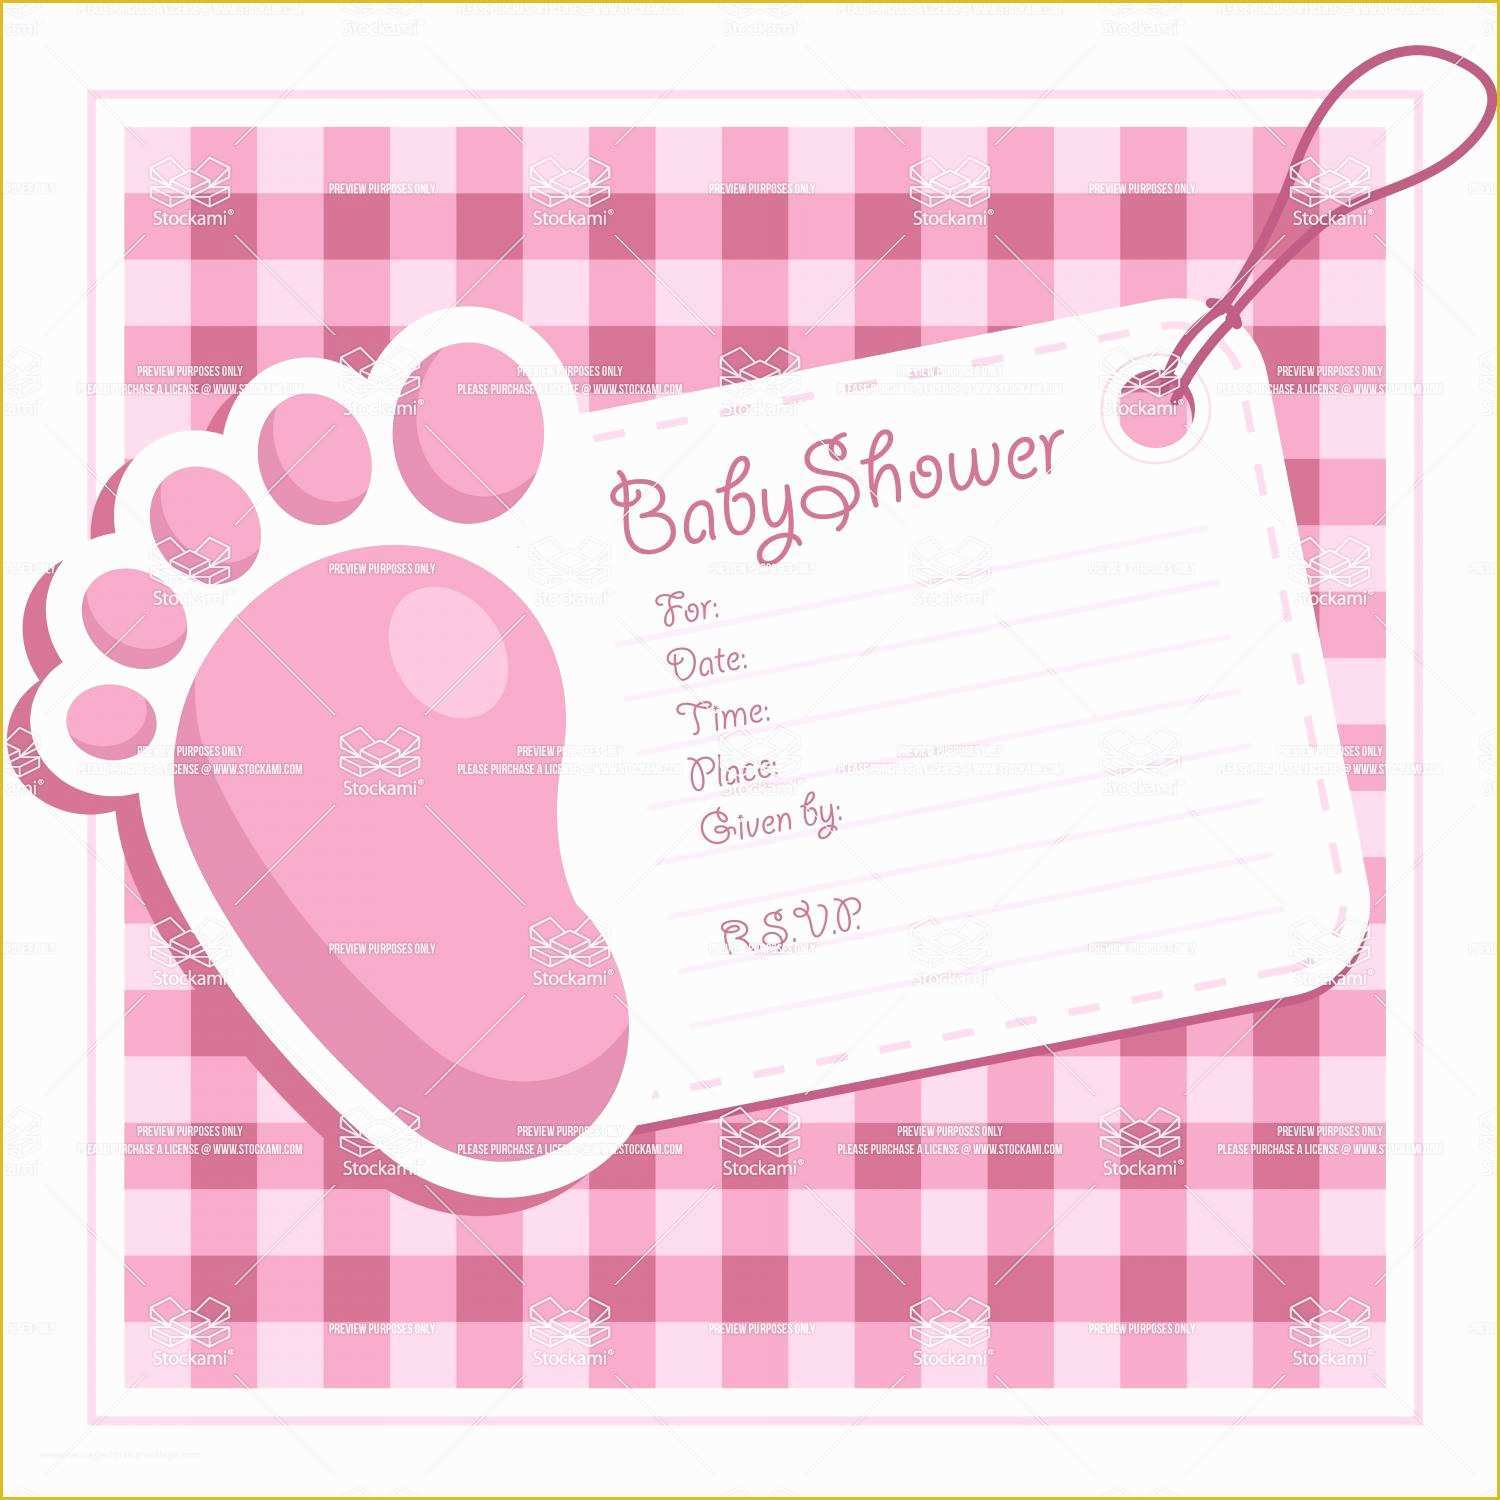 Baby Shower Invitations Templates Free Download Of Free Printable Baby Shower Invitations Templates Bridal